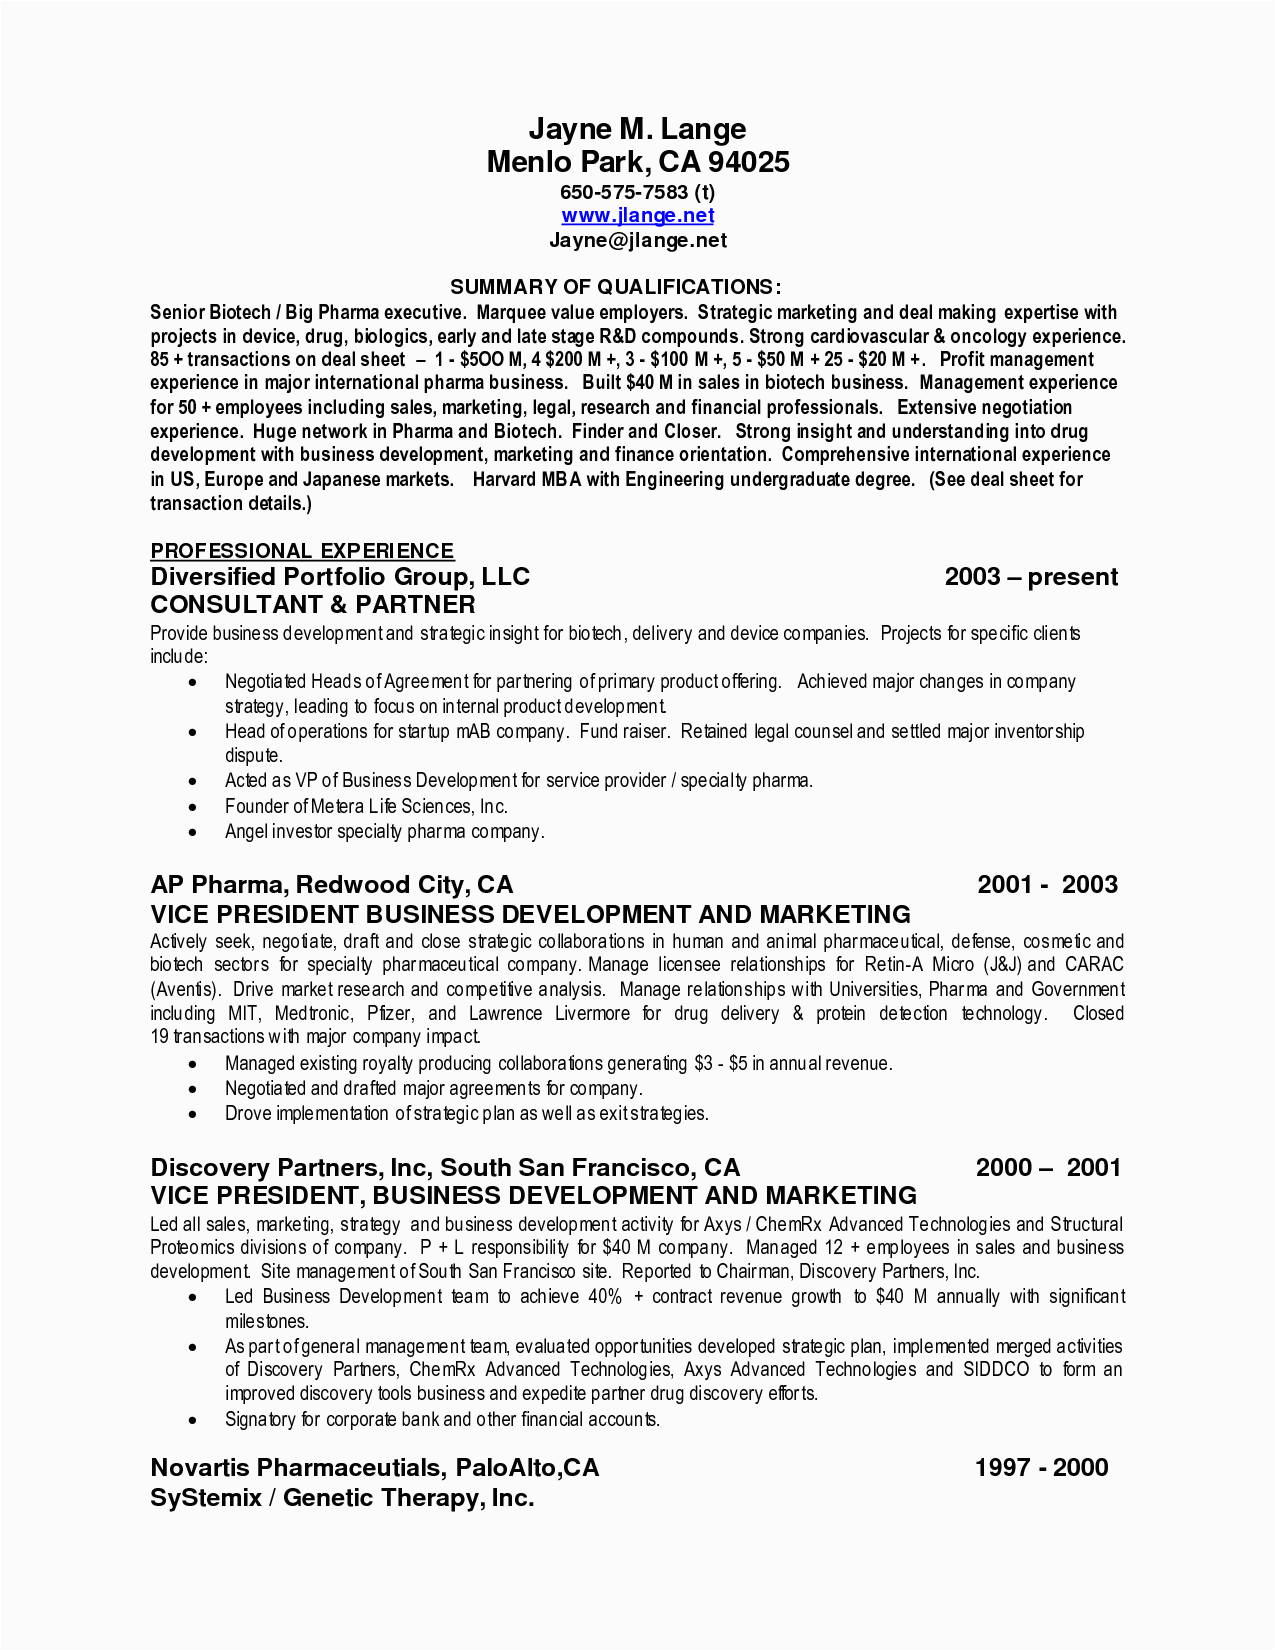 Sample Resume Summary Of Qualifications Examples Best Summary Of Qualifications Resume for 2016